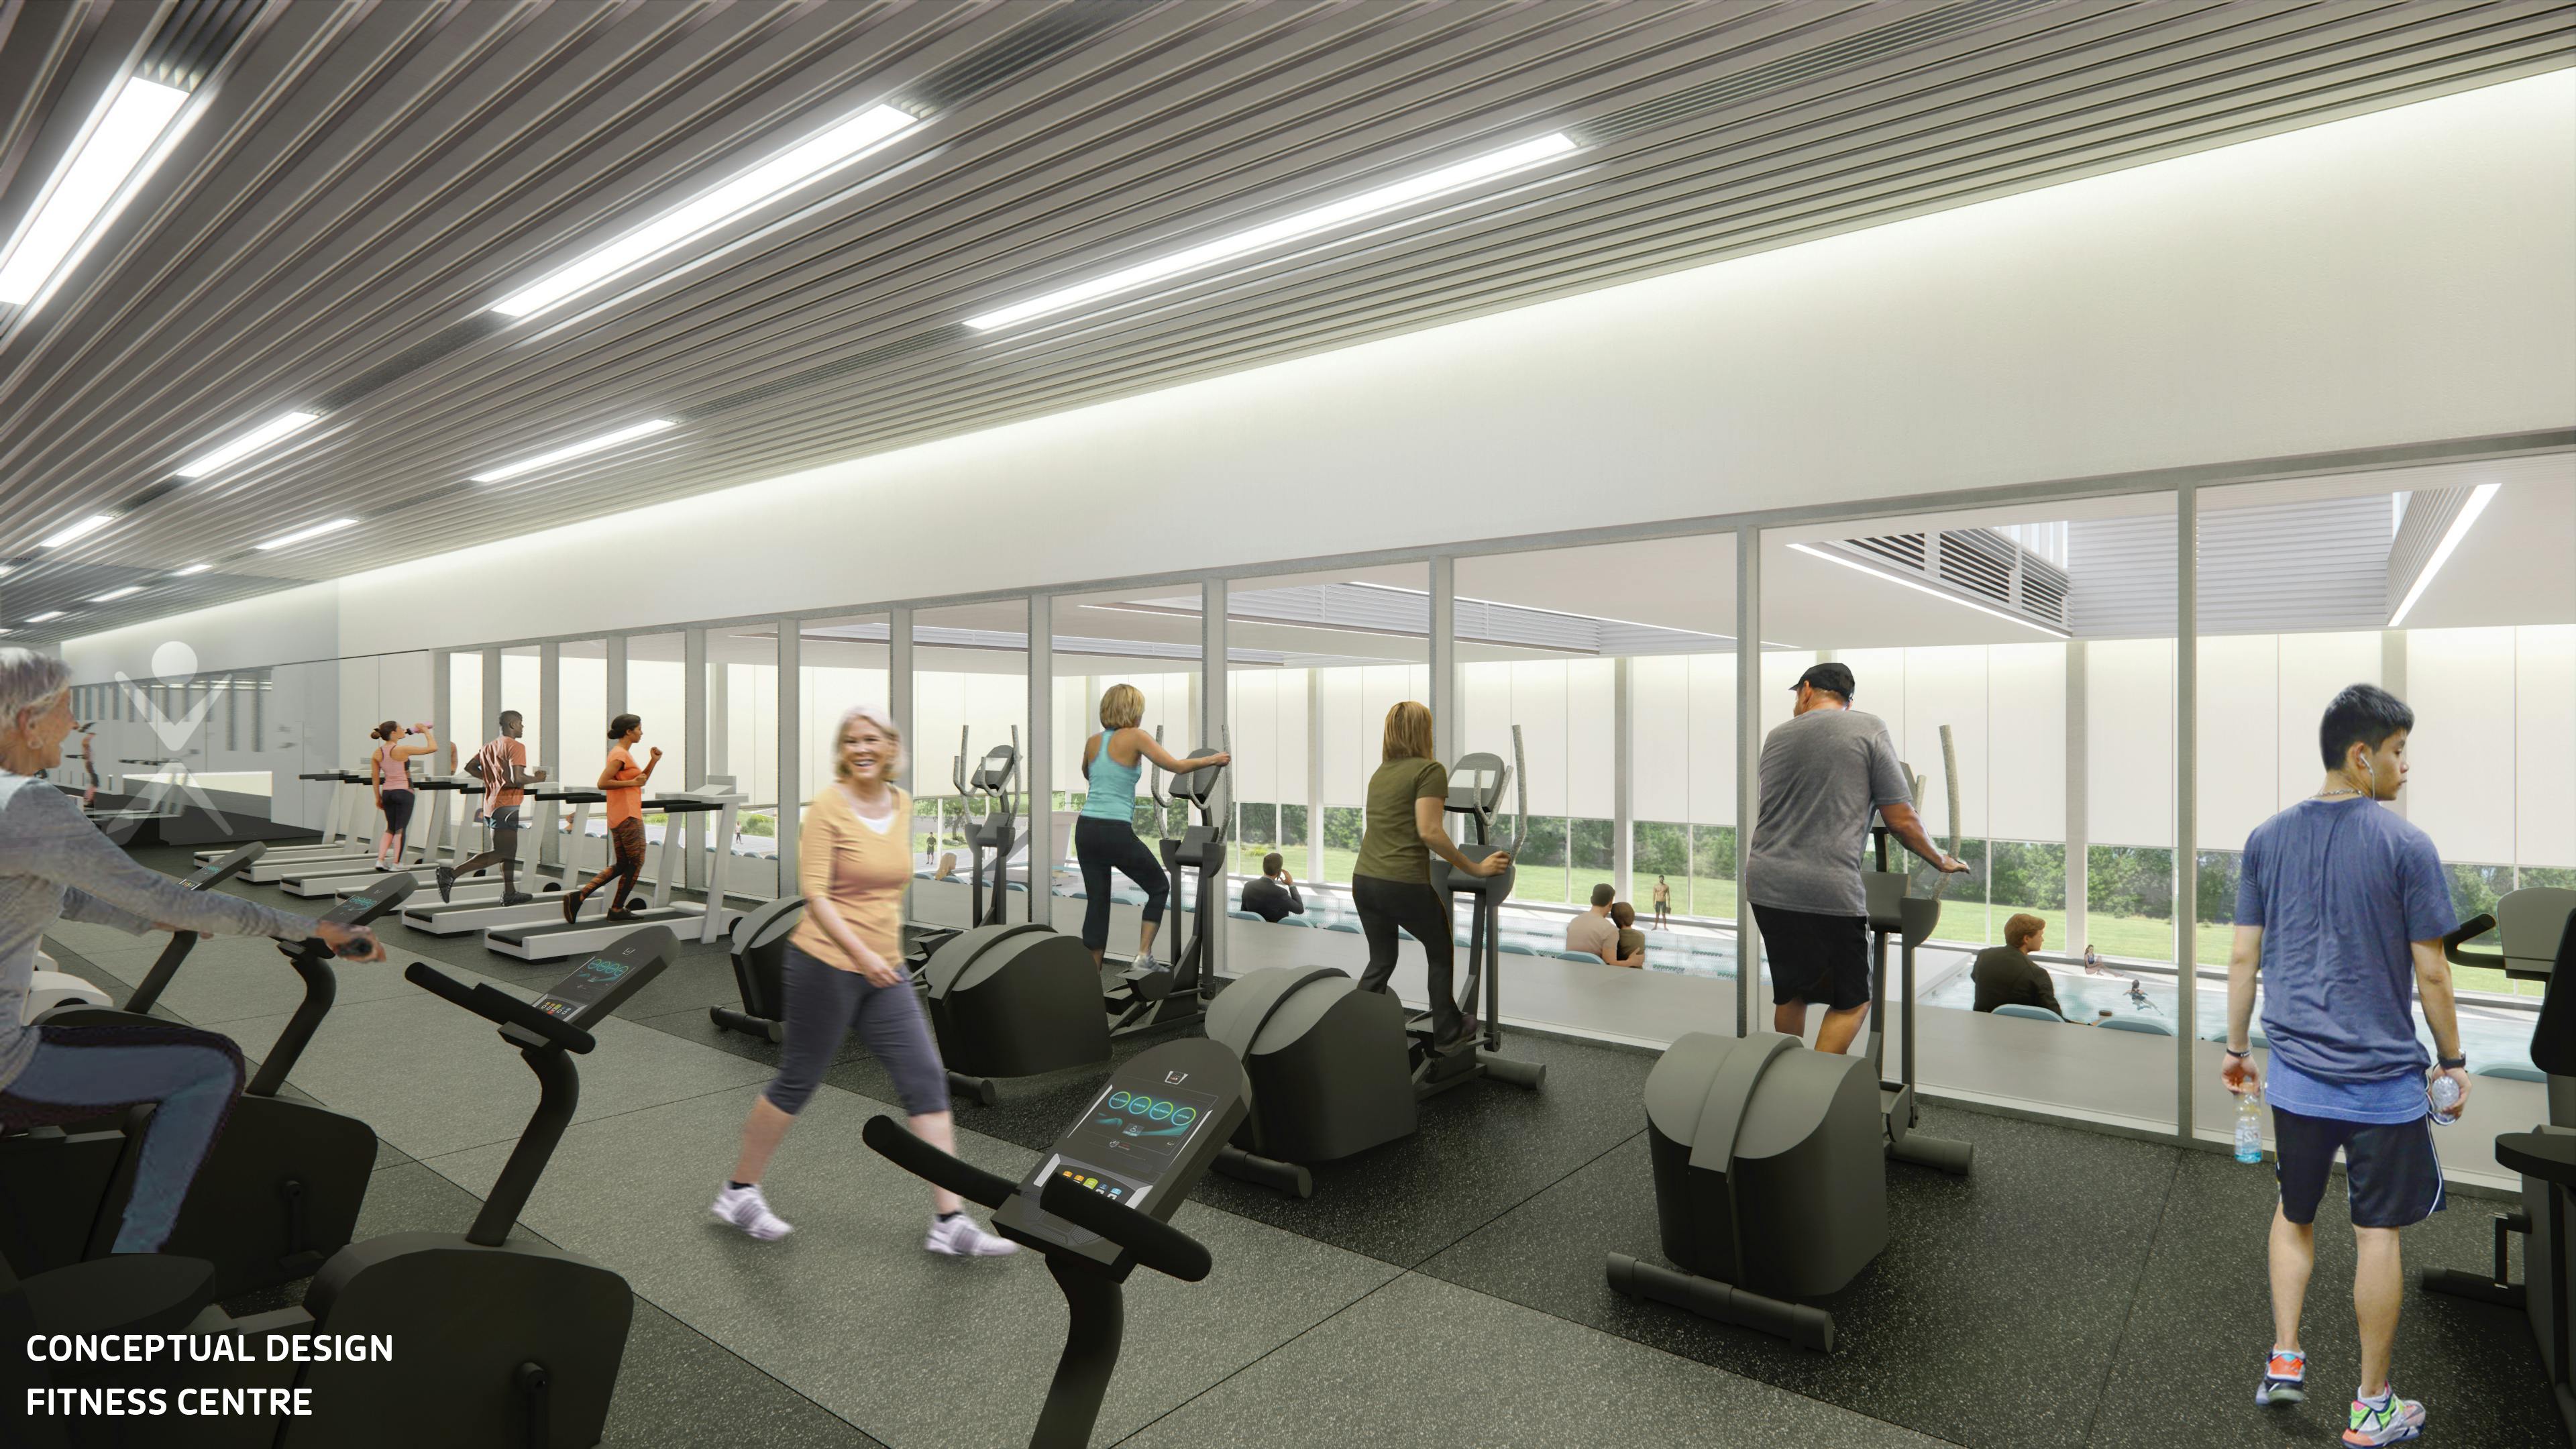 Fitness centre conceptual design